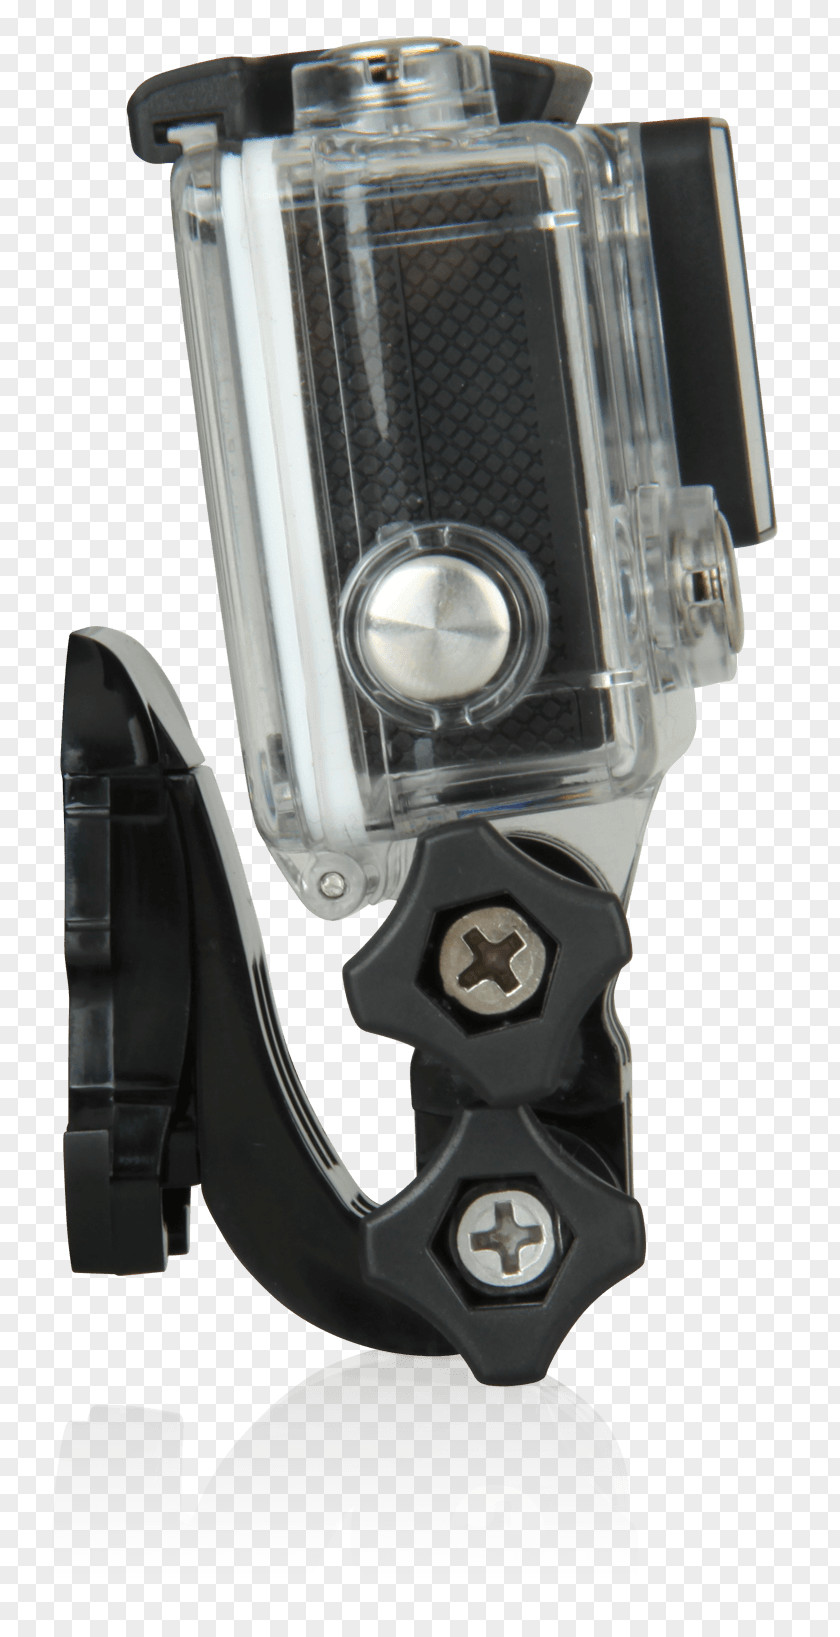 Gopro Cameras Action Camera Liquid-crystal Display GoPro Image Resolution PNG